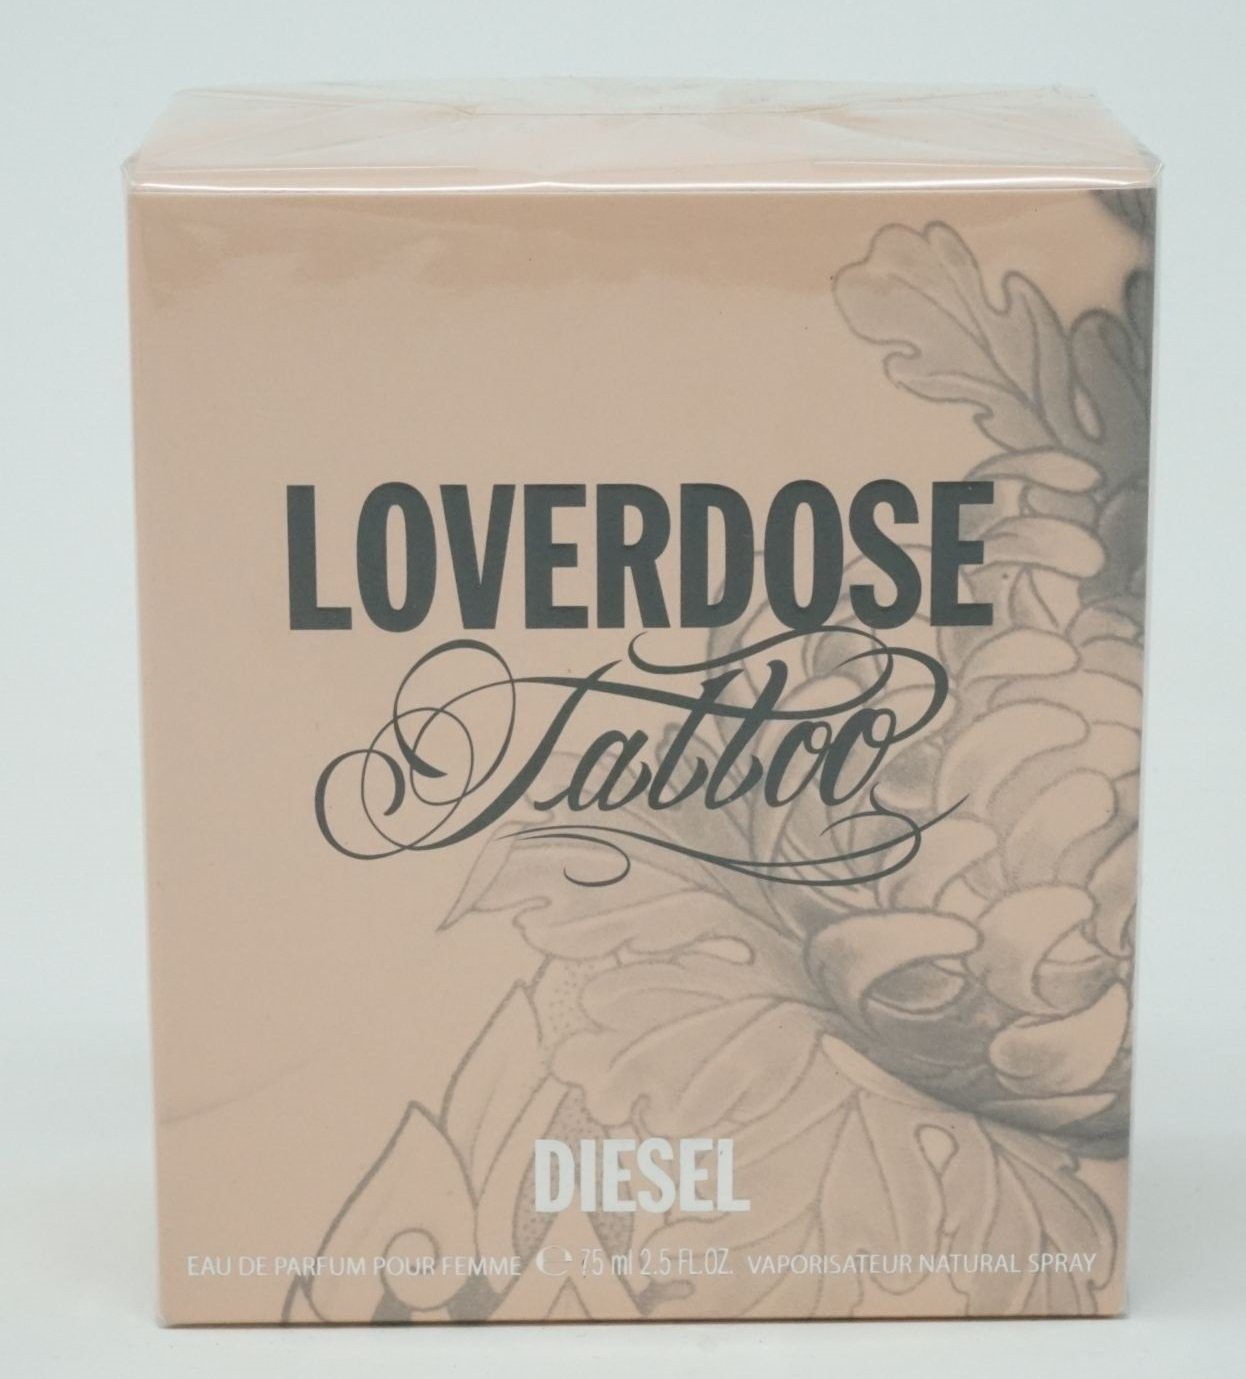 Loverdose Eau Parfum de Spray Eau Parfum Tattoo Diesel de Diesel 75ml